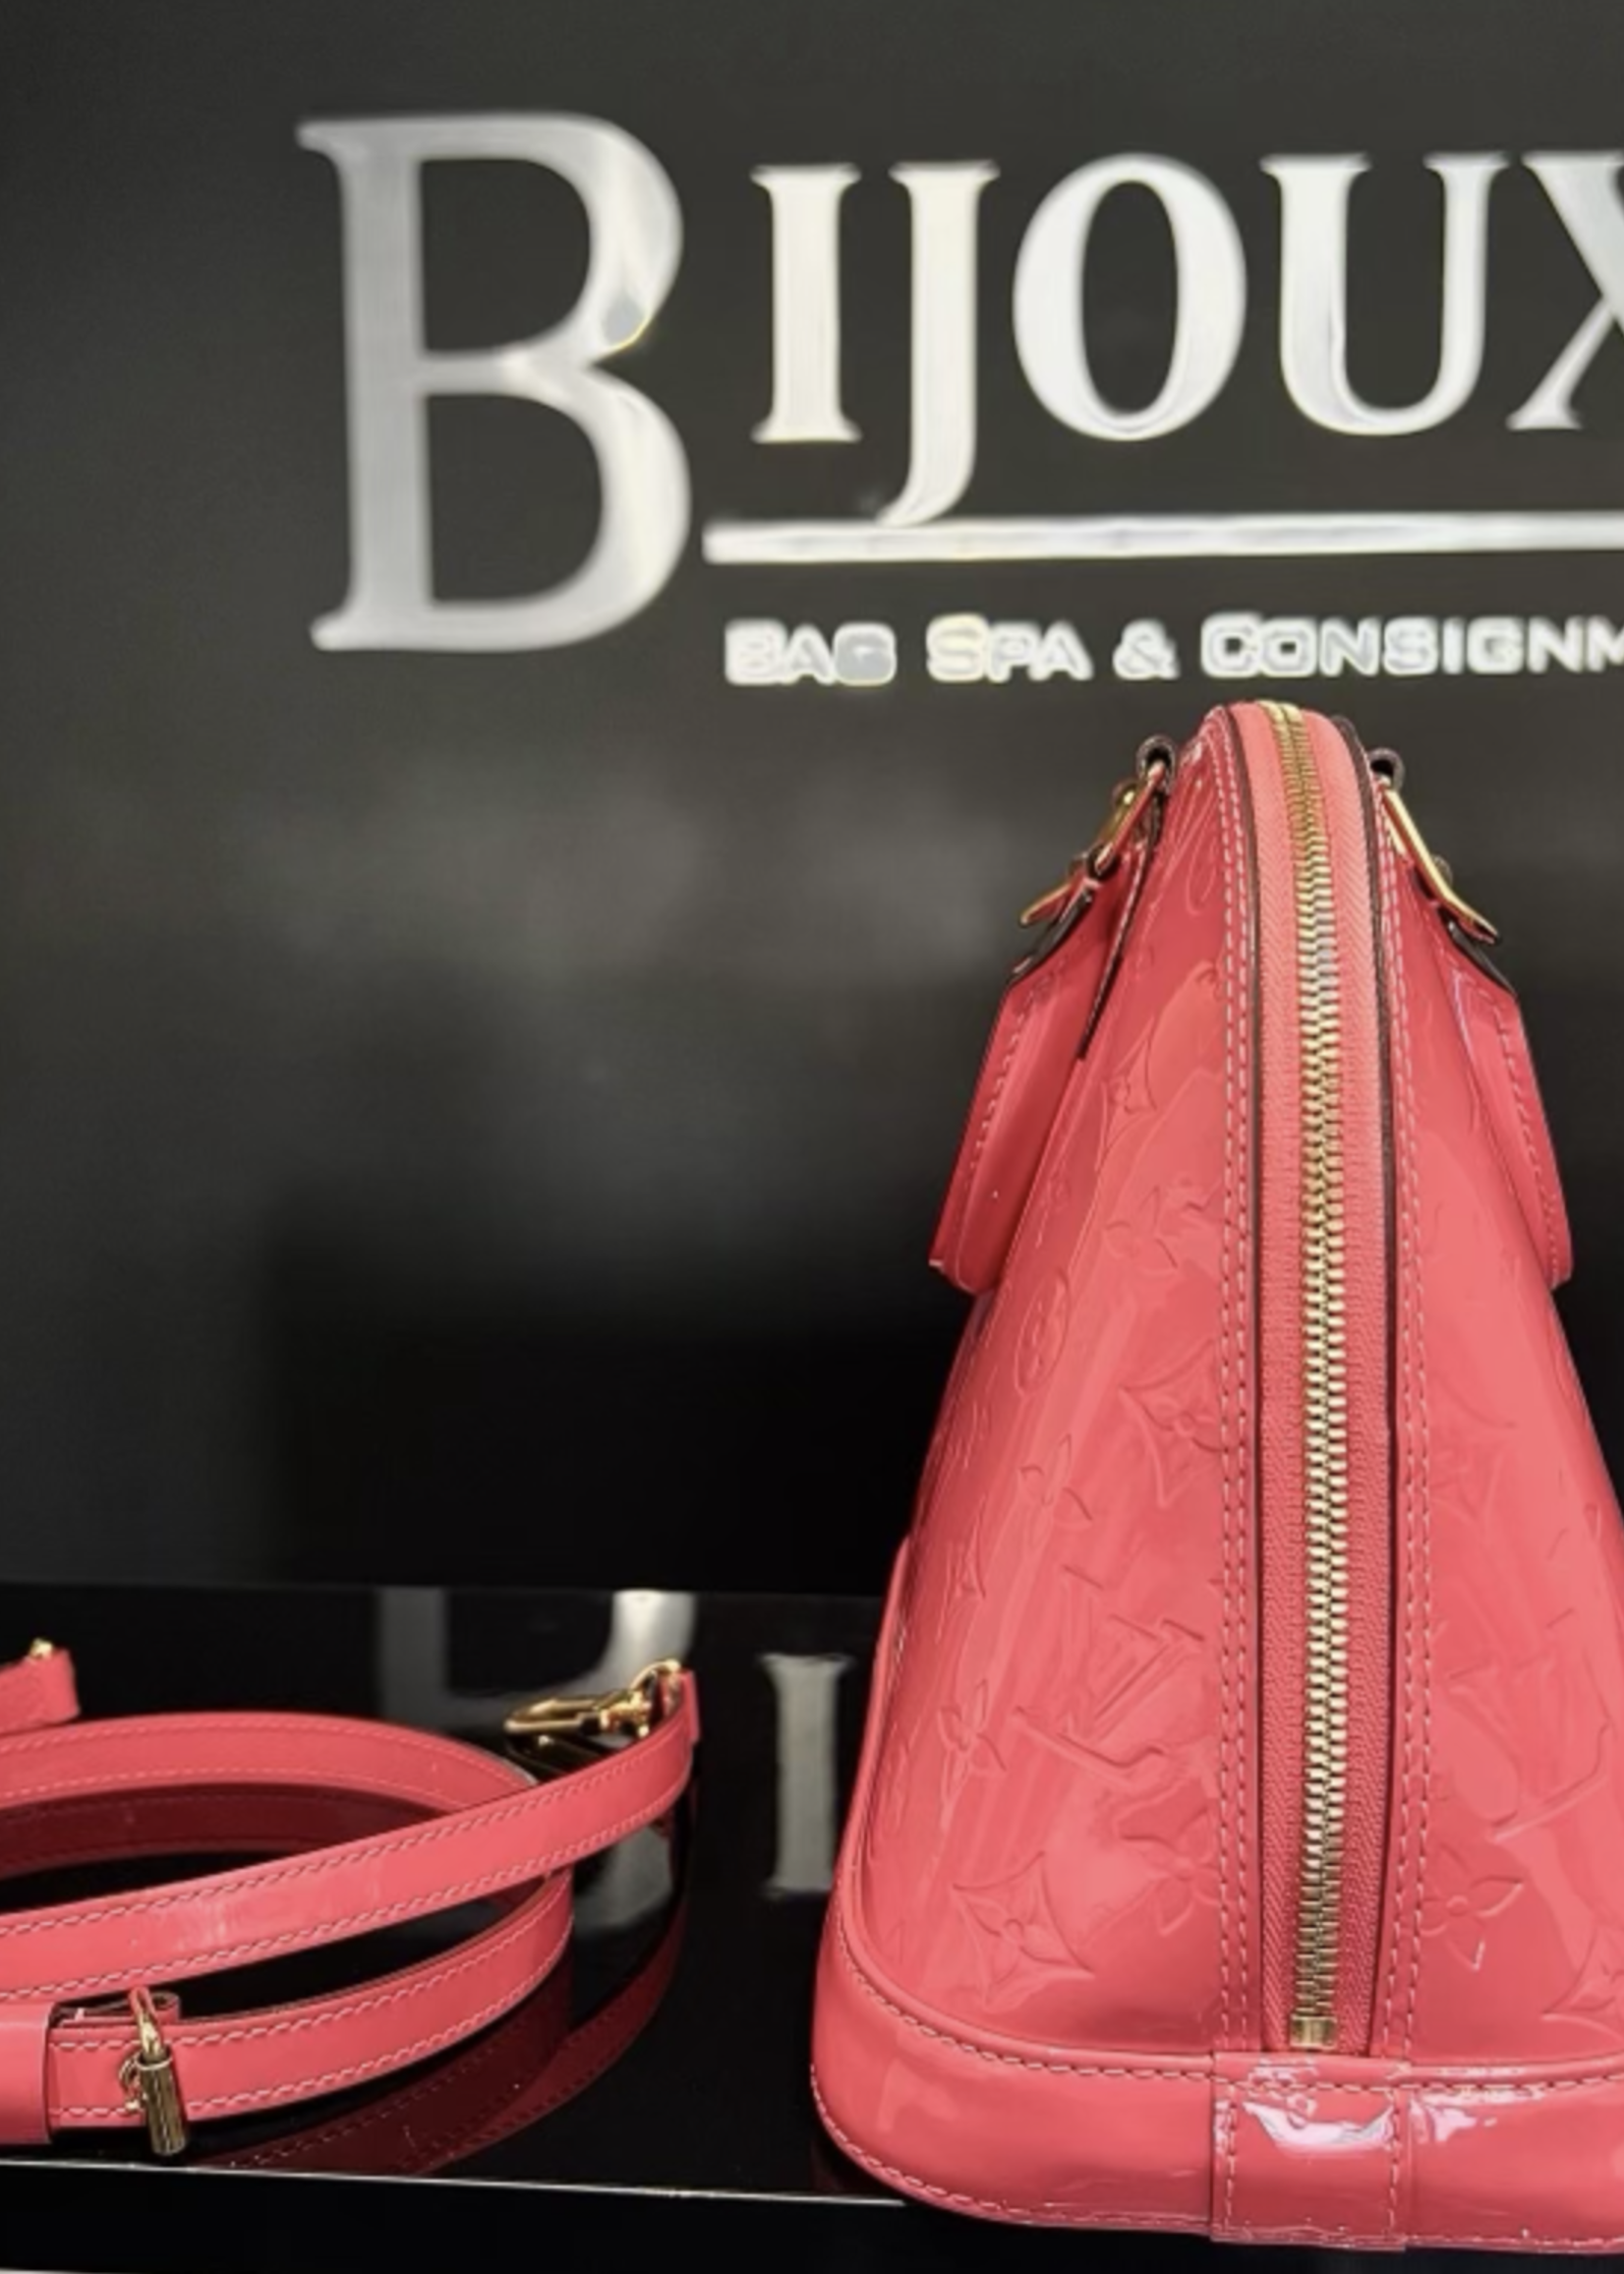 Louis Vuitton Alma PM - Bijoux Bag Spa & Consignment